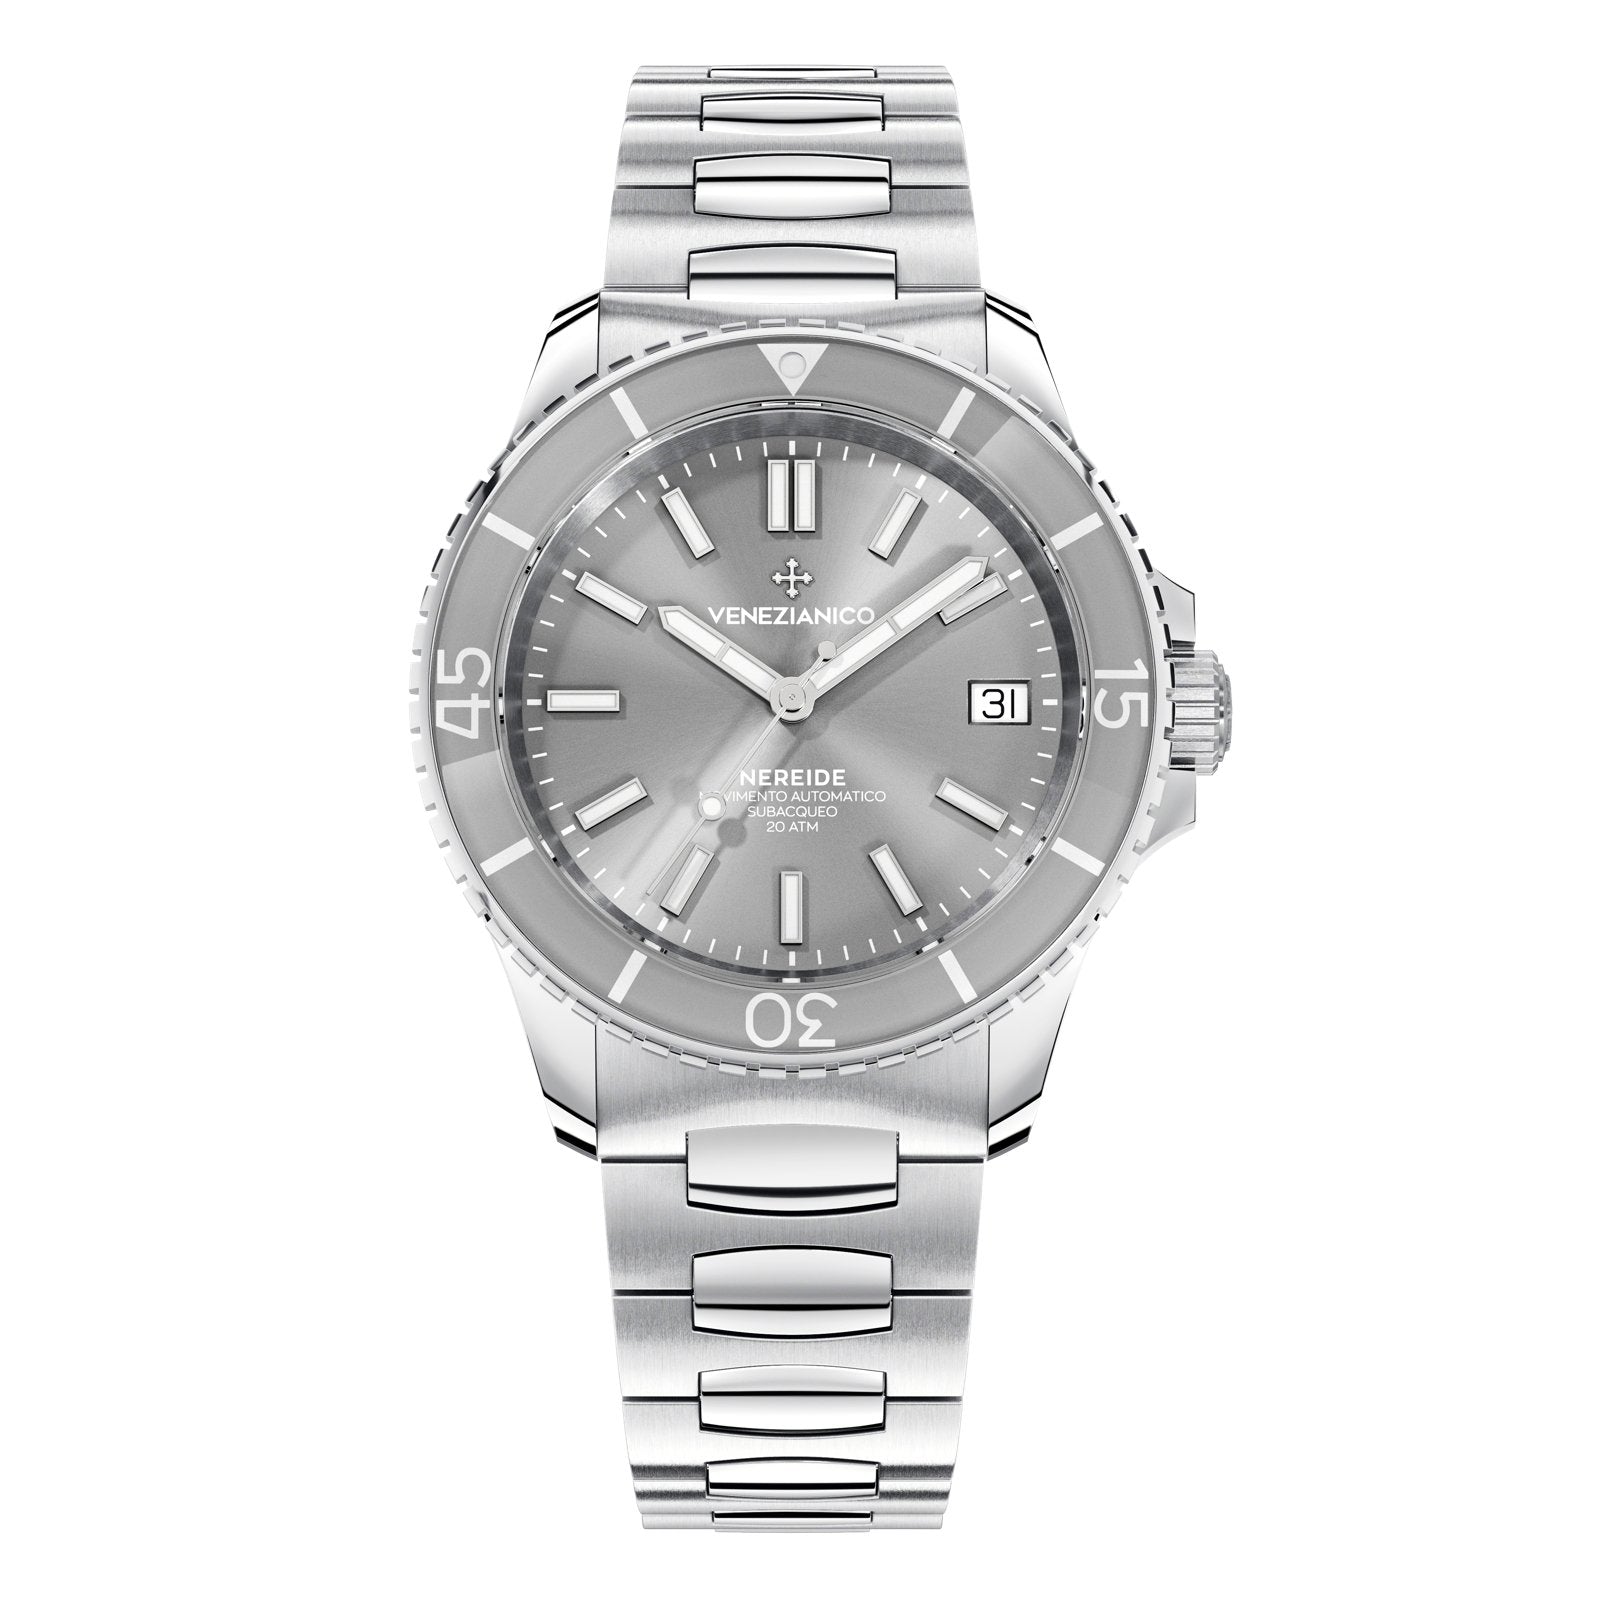 Venezianico Automatic Watch Nereide 39 Canova Bracelet Grey 3121505C - Watches & Crystals